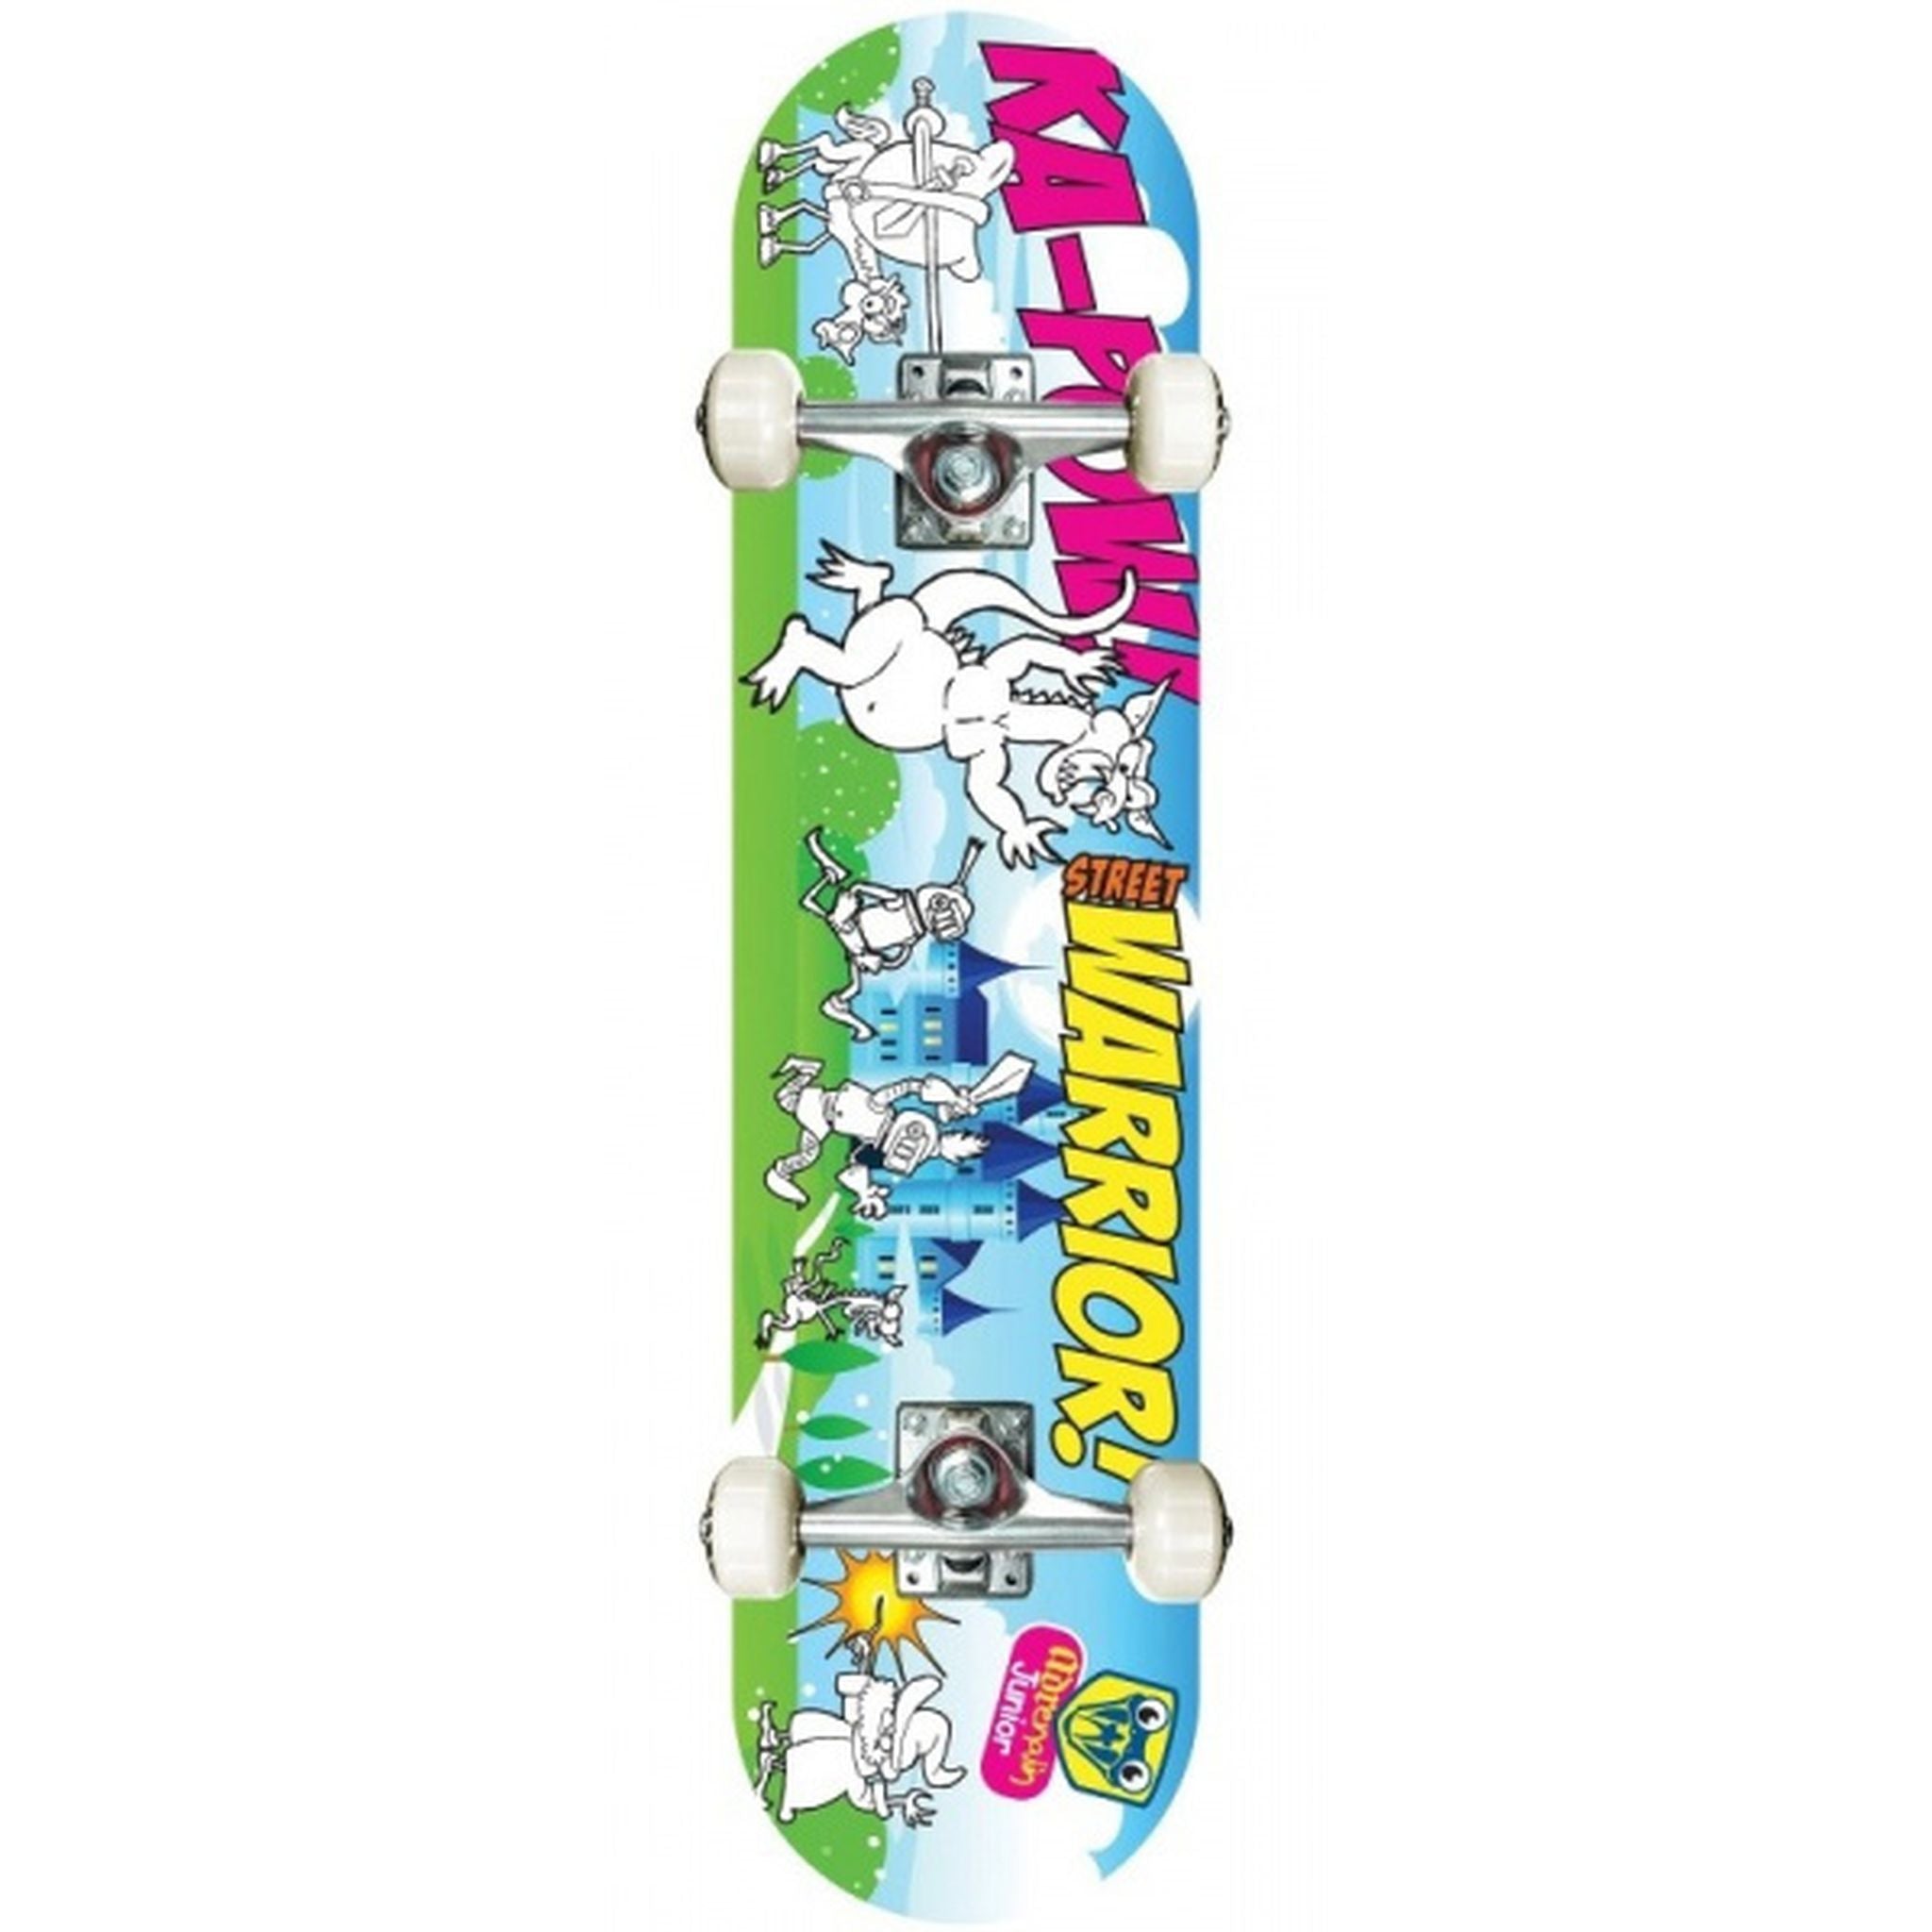 Adrenalin Street Warrior Skateboard 29 x 7